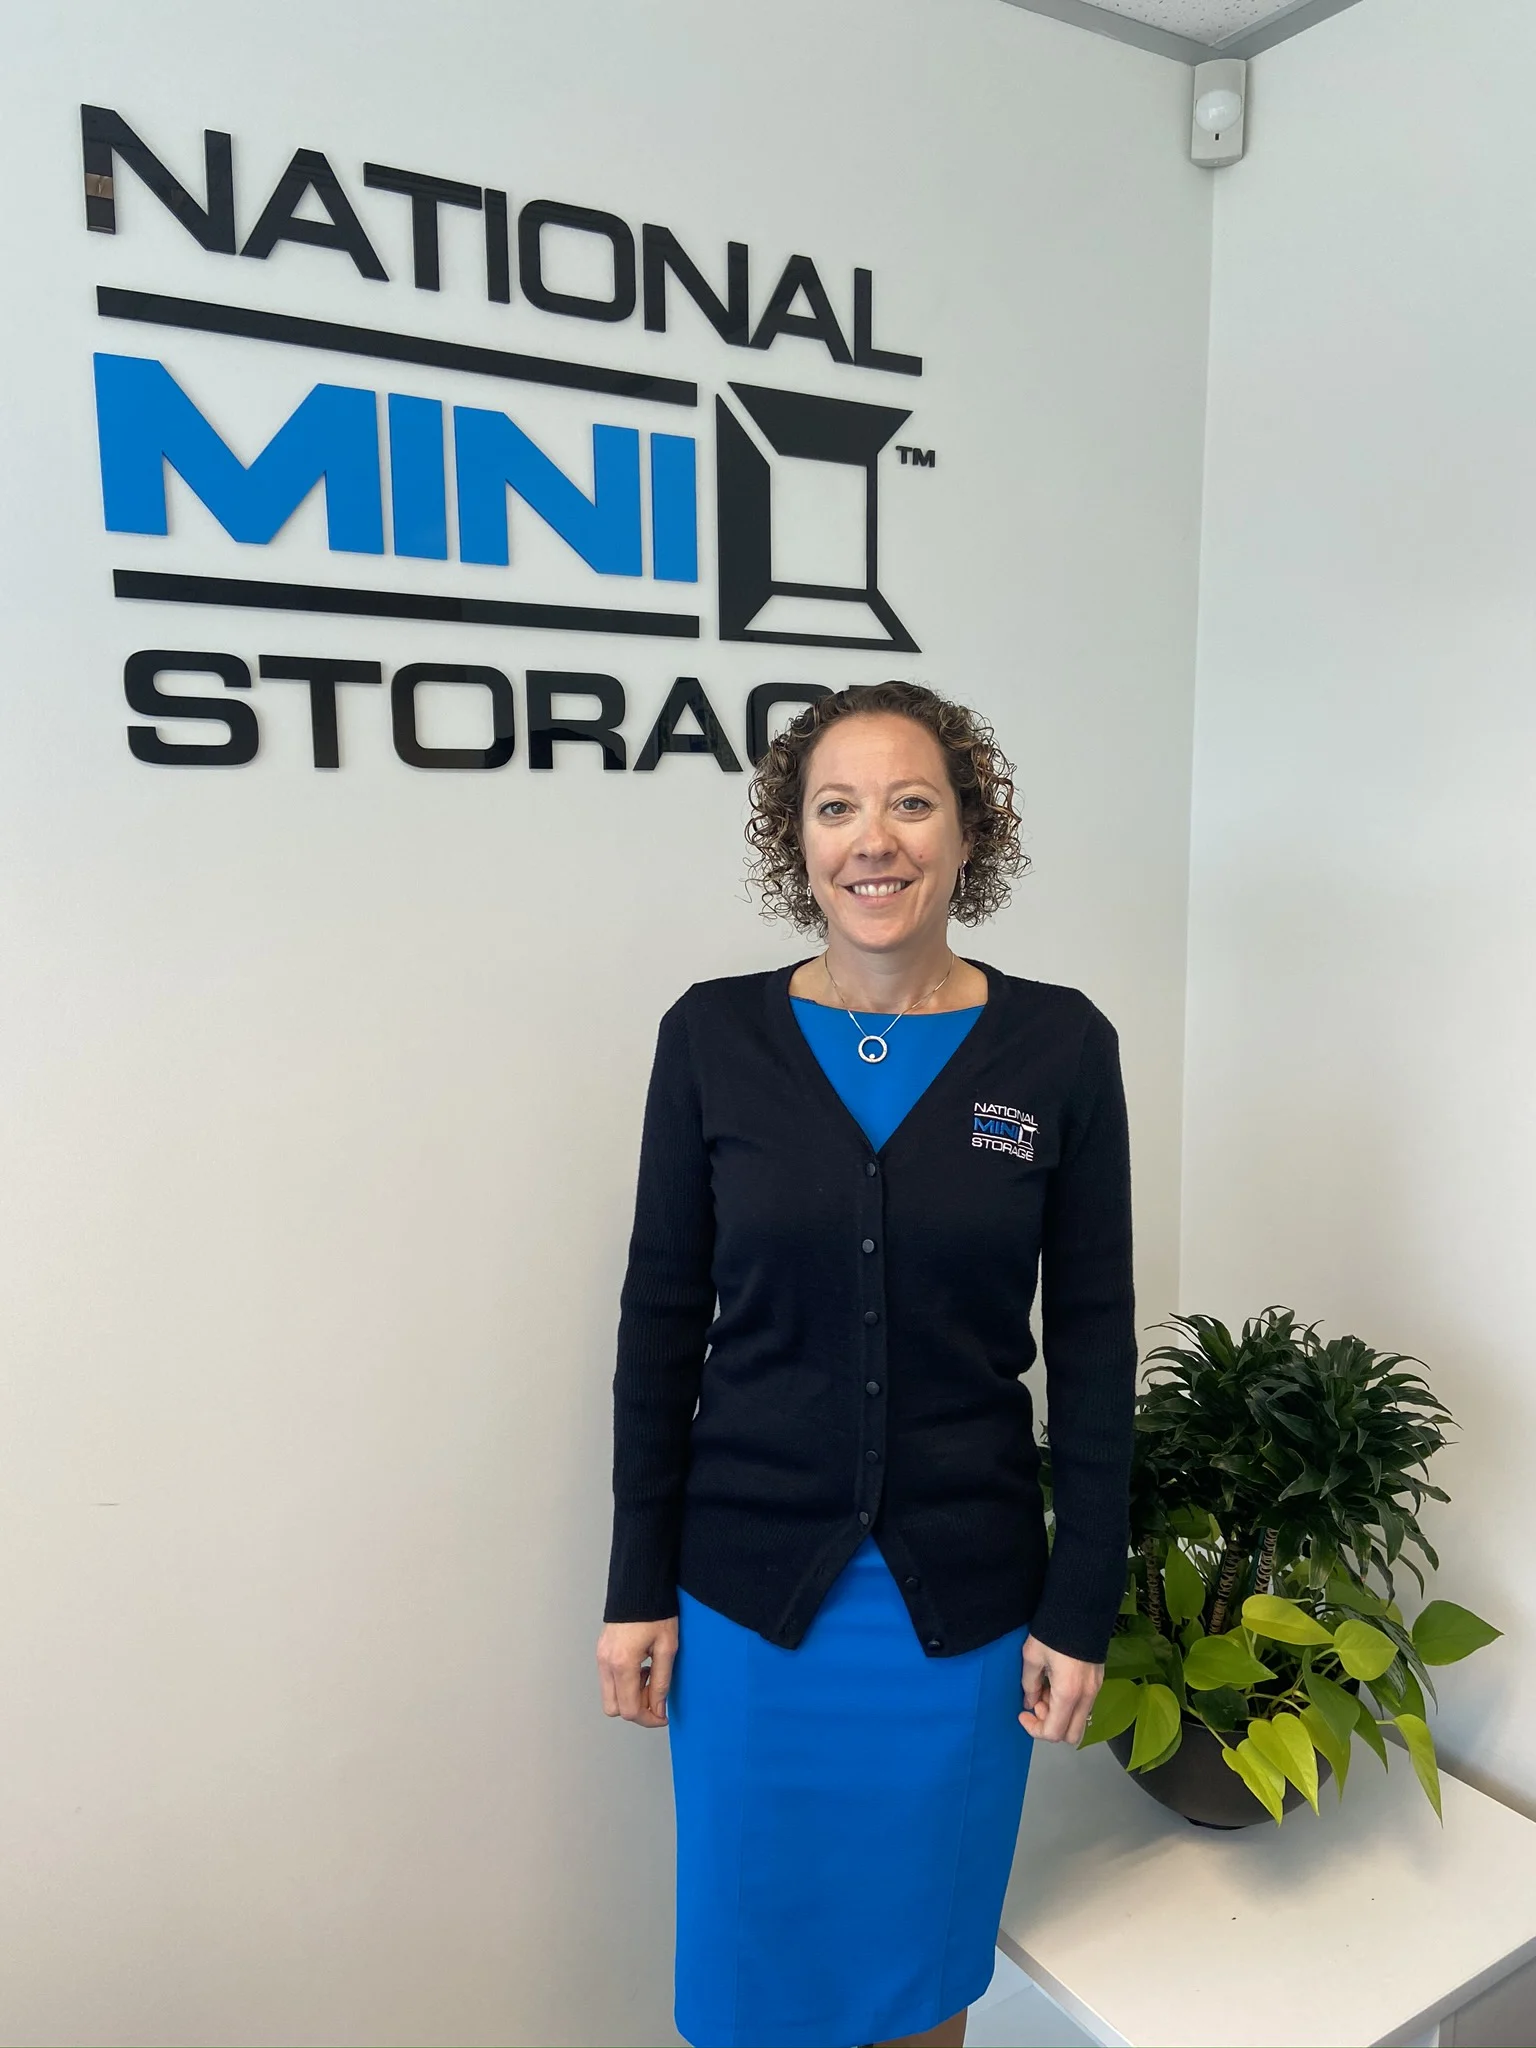 National Mini Storage CEO Caroline Plowman